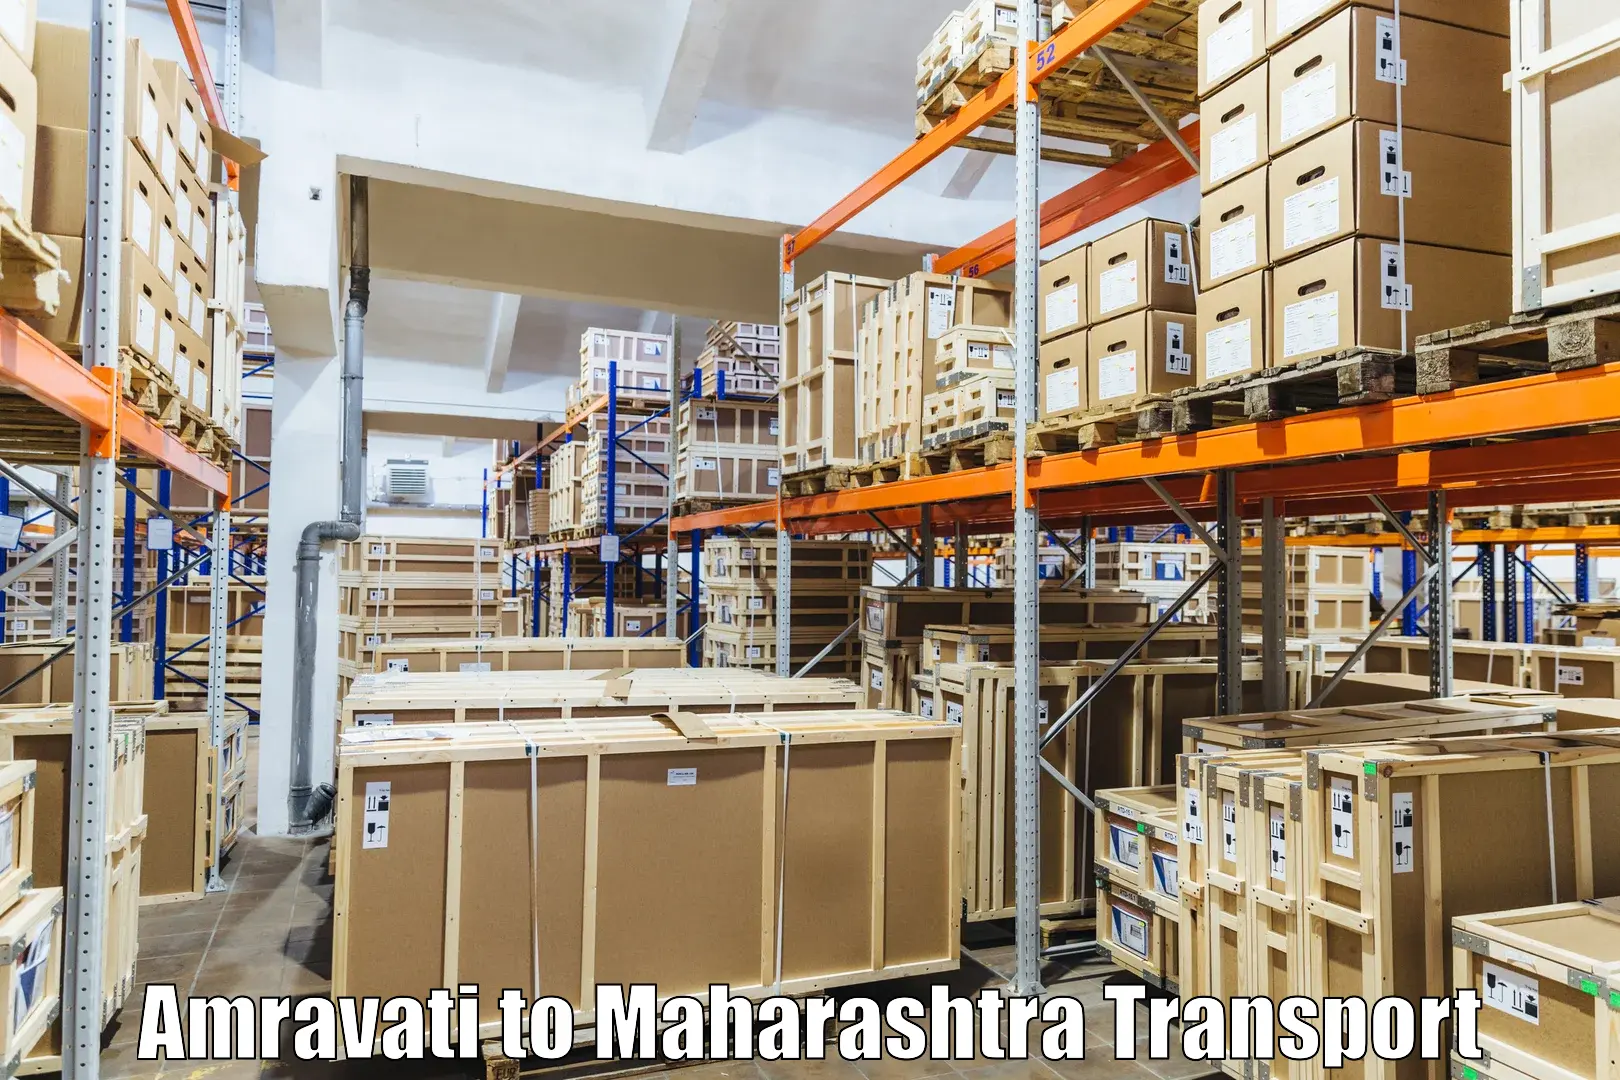 Truck transport companies in India Amravati to Walchandnagar